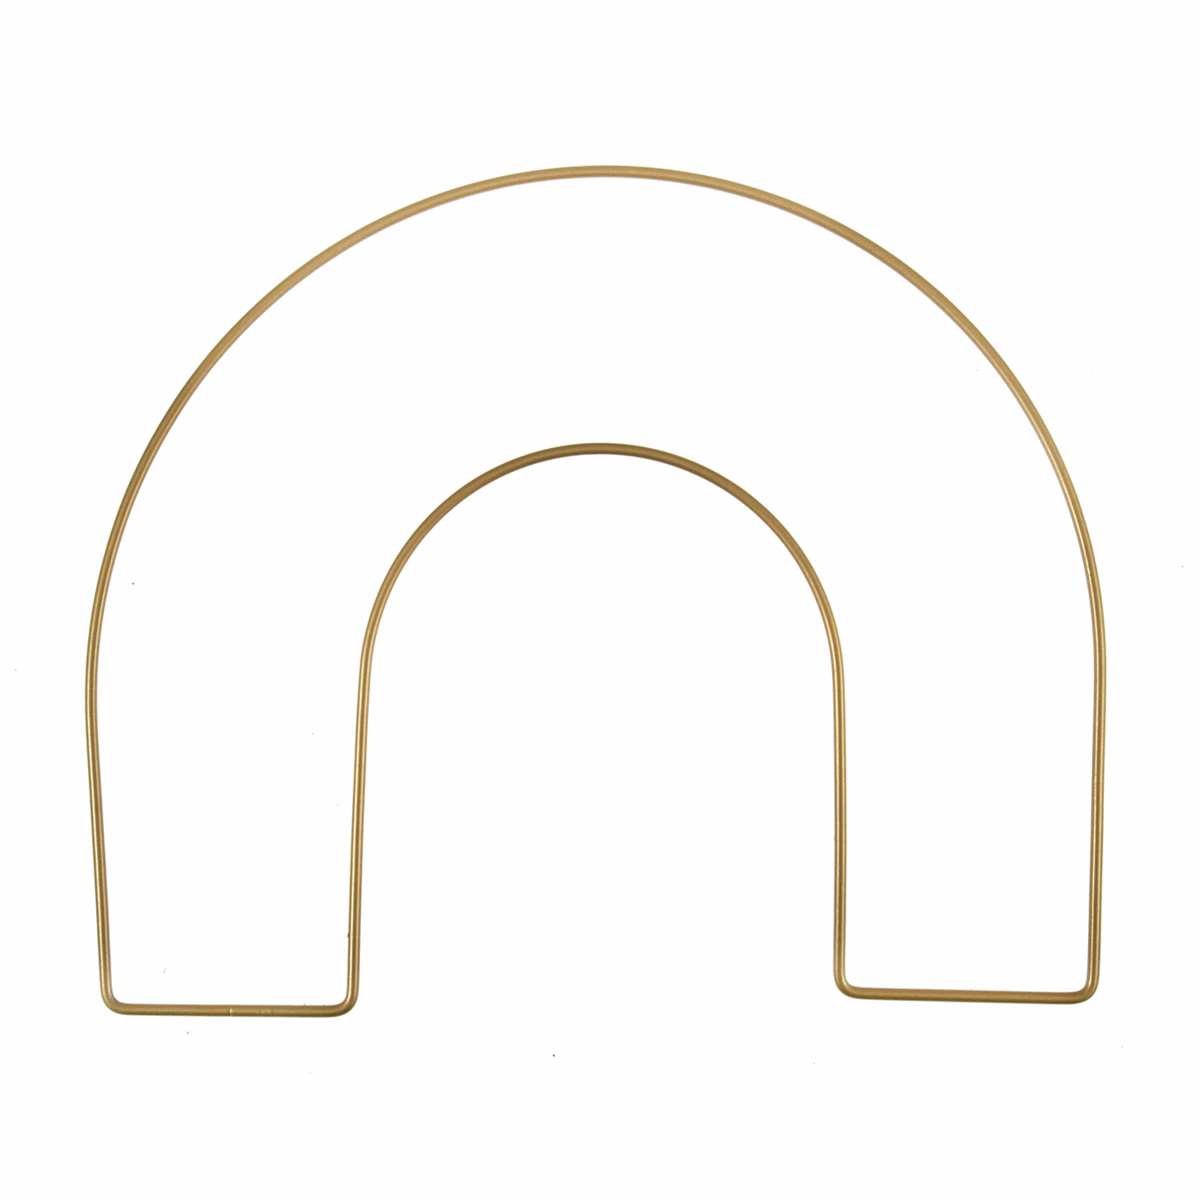 Trimits Gold Metal Rainbow Craft Hoop - 20cm